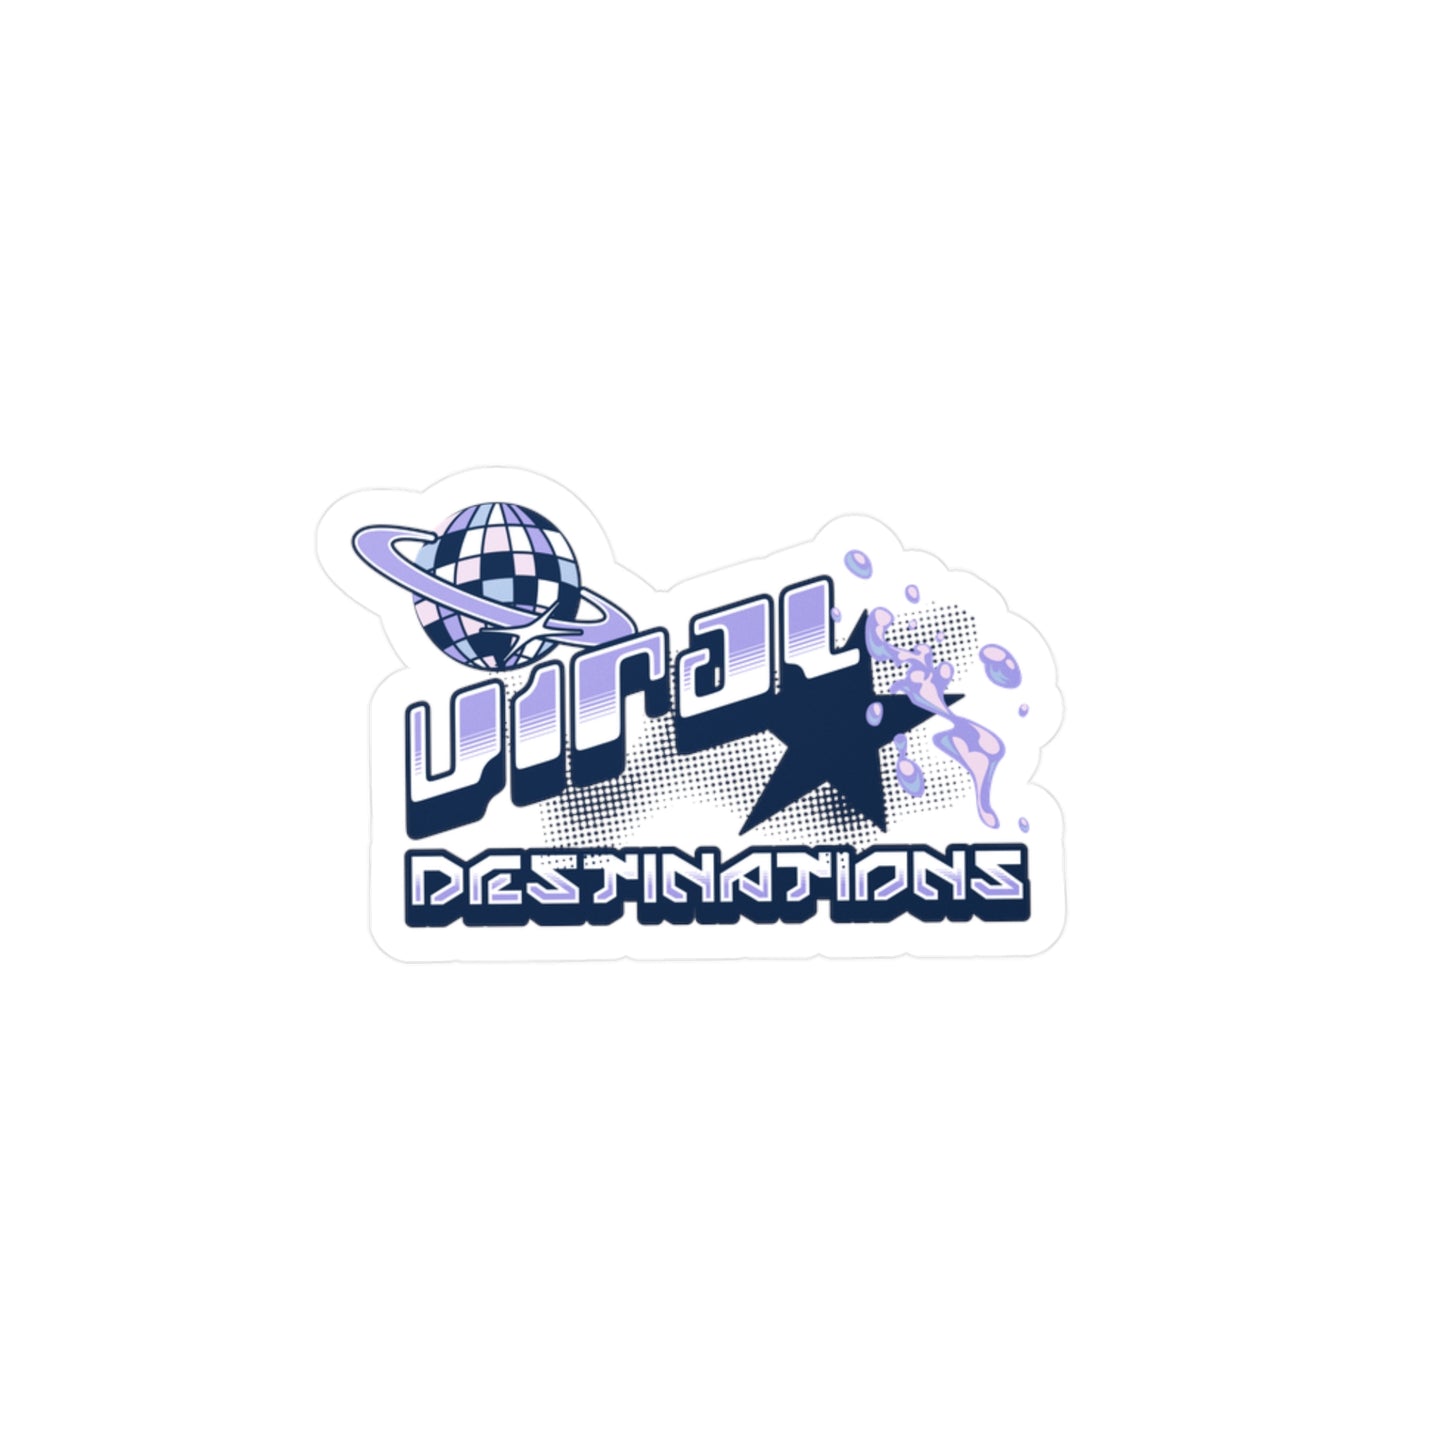 ViralDestinations logo Kiss-Cut Vinyl Decals